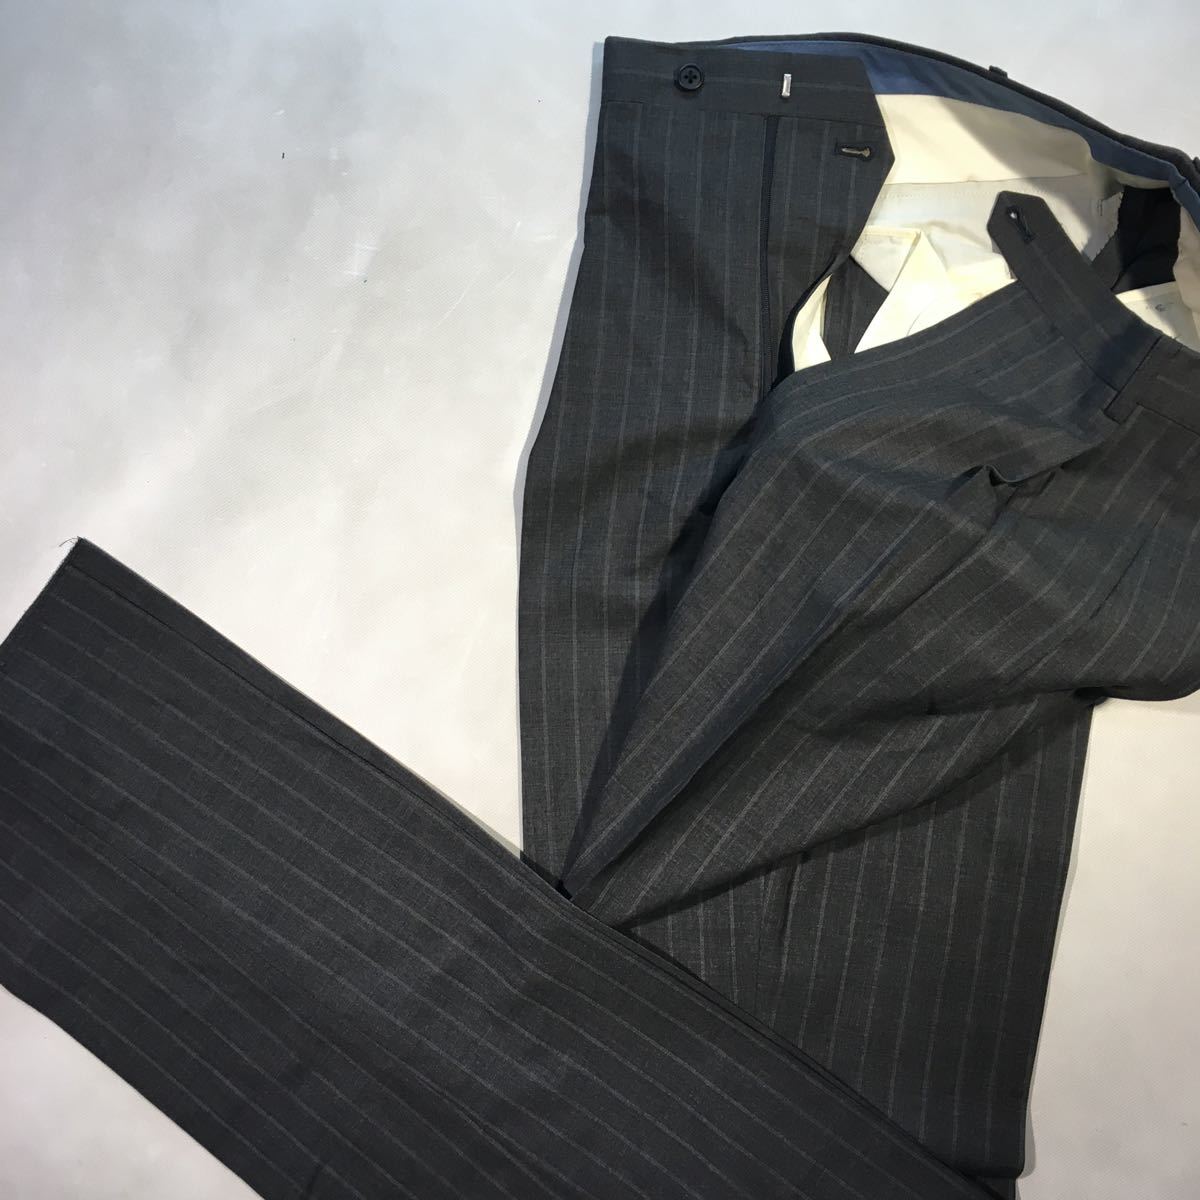  new goods high class Venere Espeno×CANONICO super120*s Italy cloth 3. button setup suit tall size YA9 gray series chock stripe 